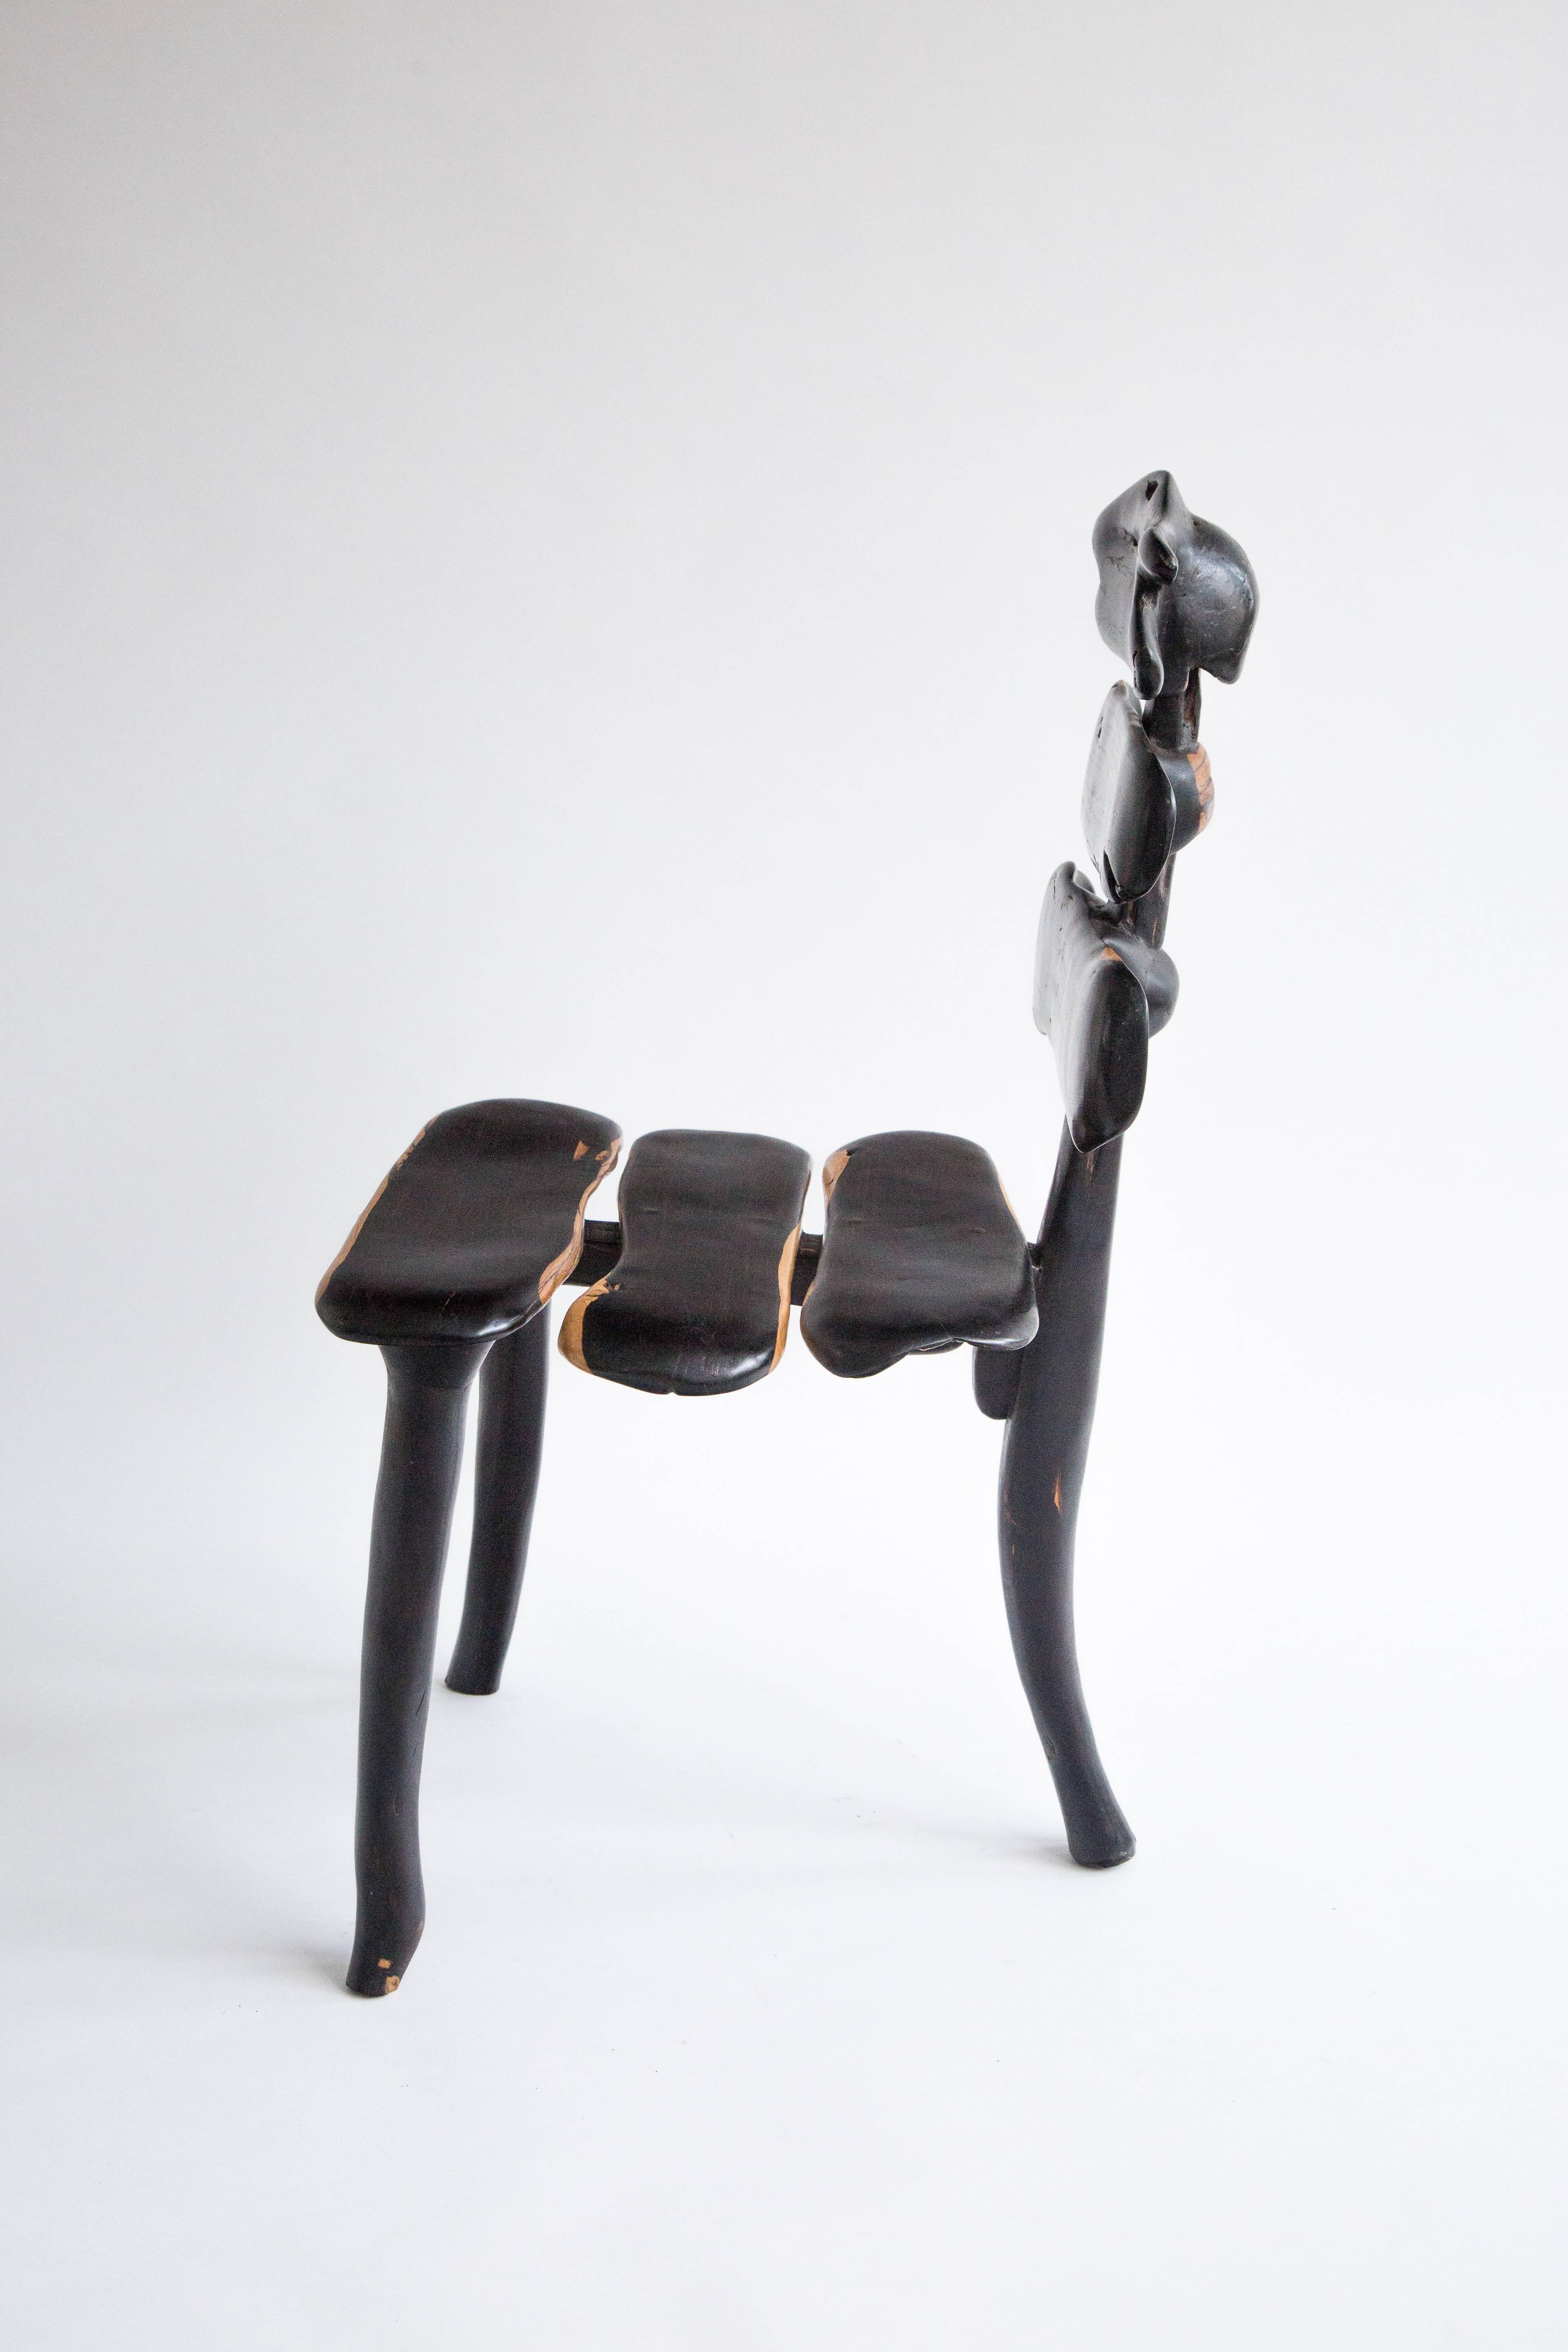 Vertebrae Chair - Sculpture by Balla Niang